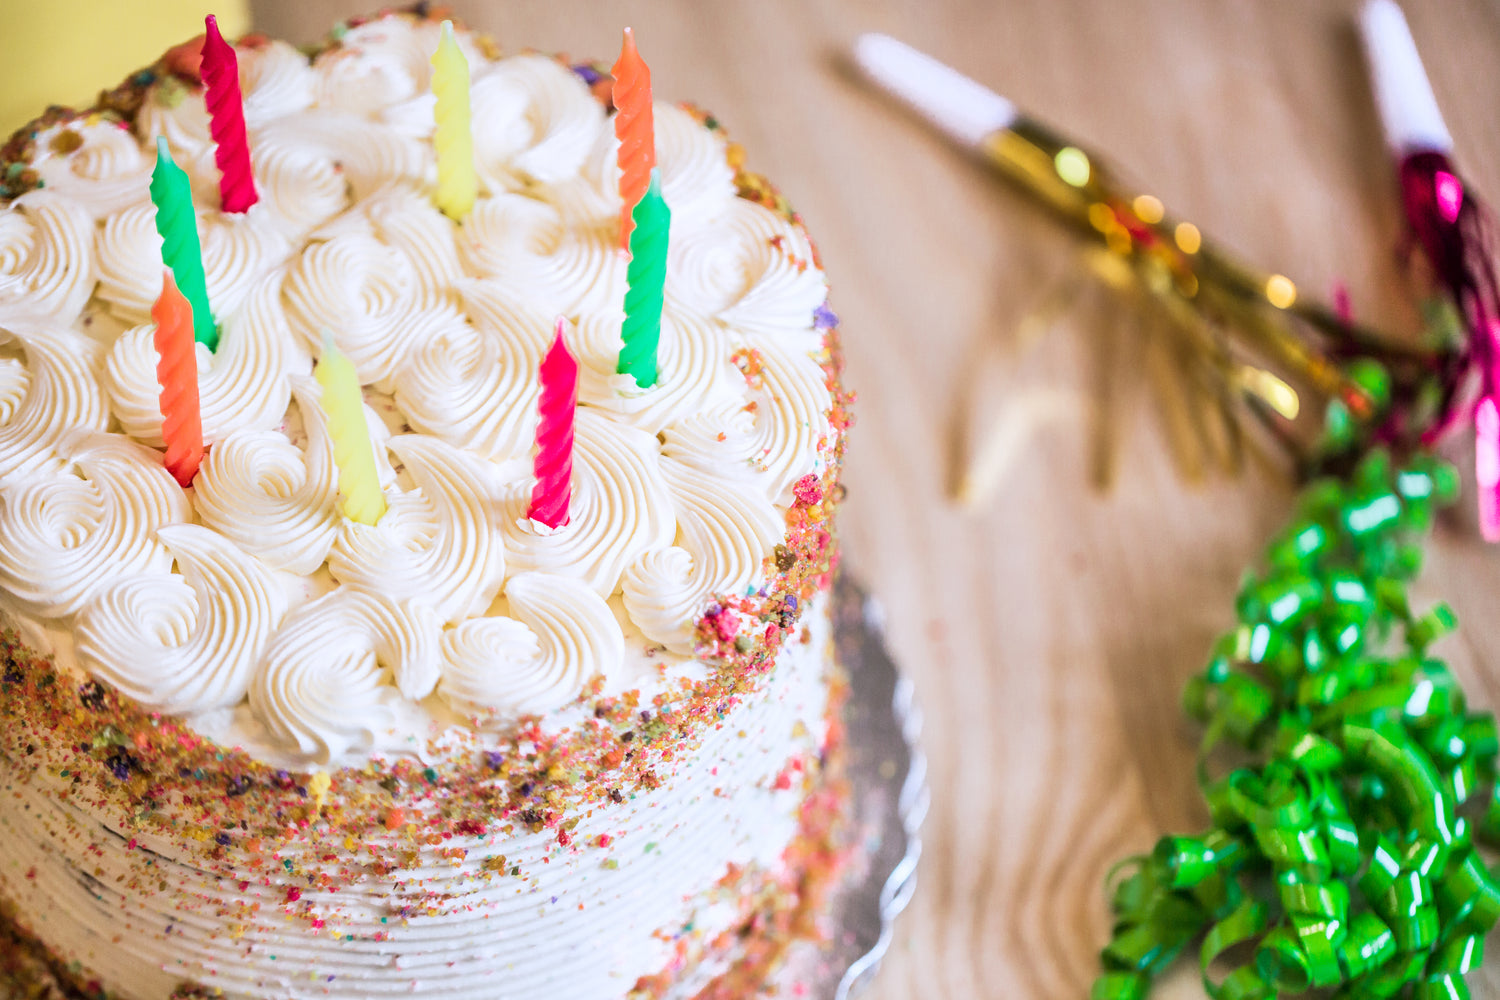 cbd wellness birthday cake is naturally flavored to mimic the taste of birthday cake